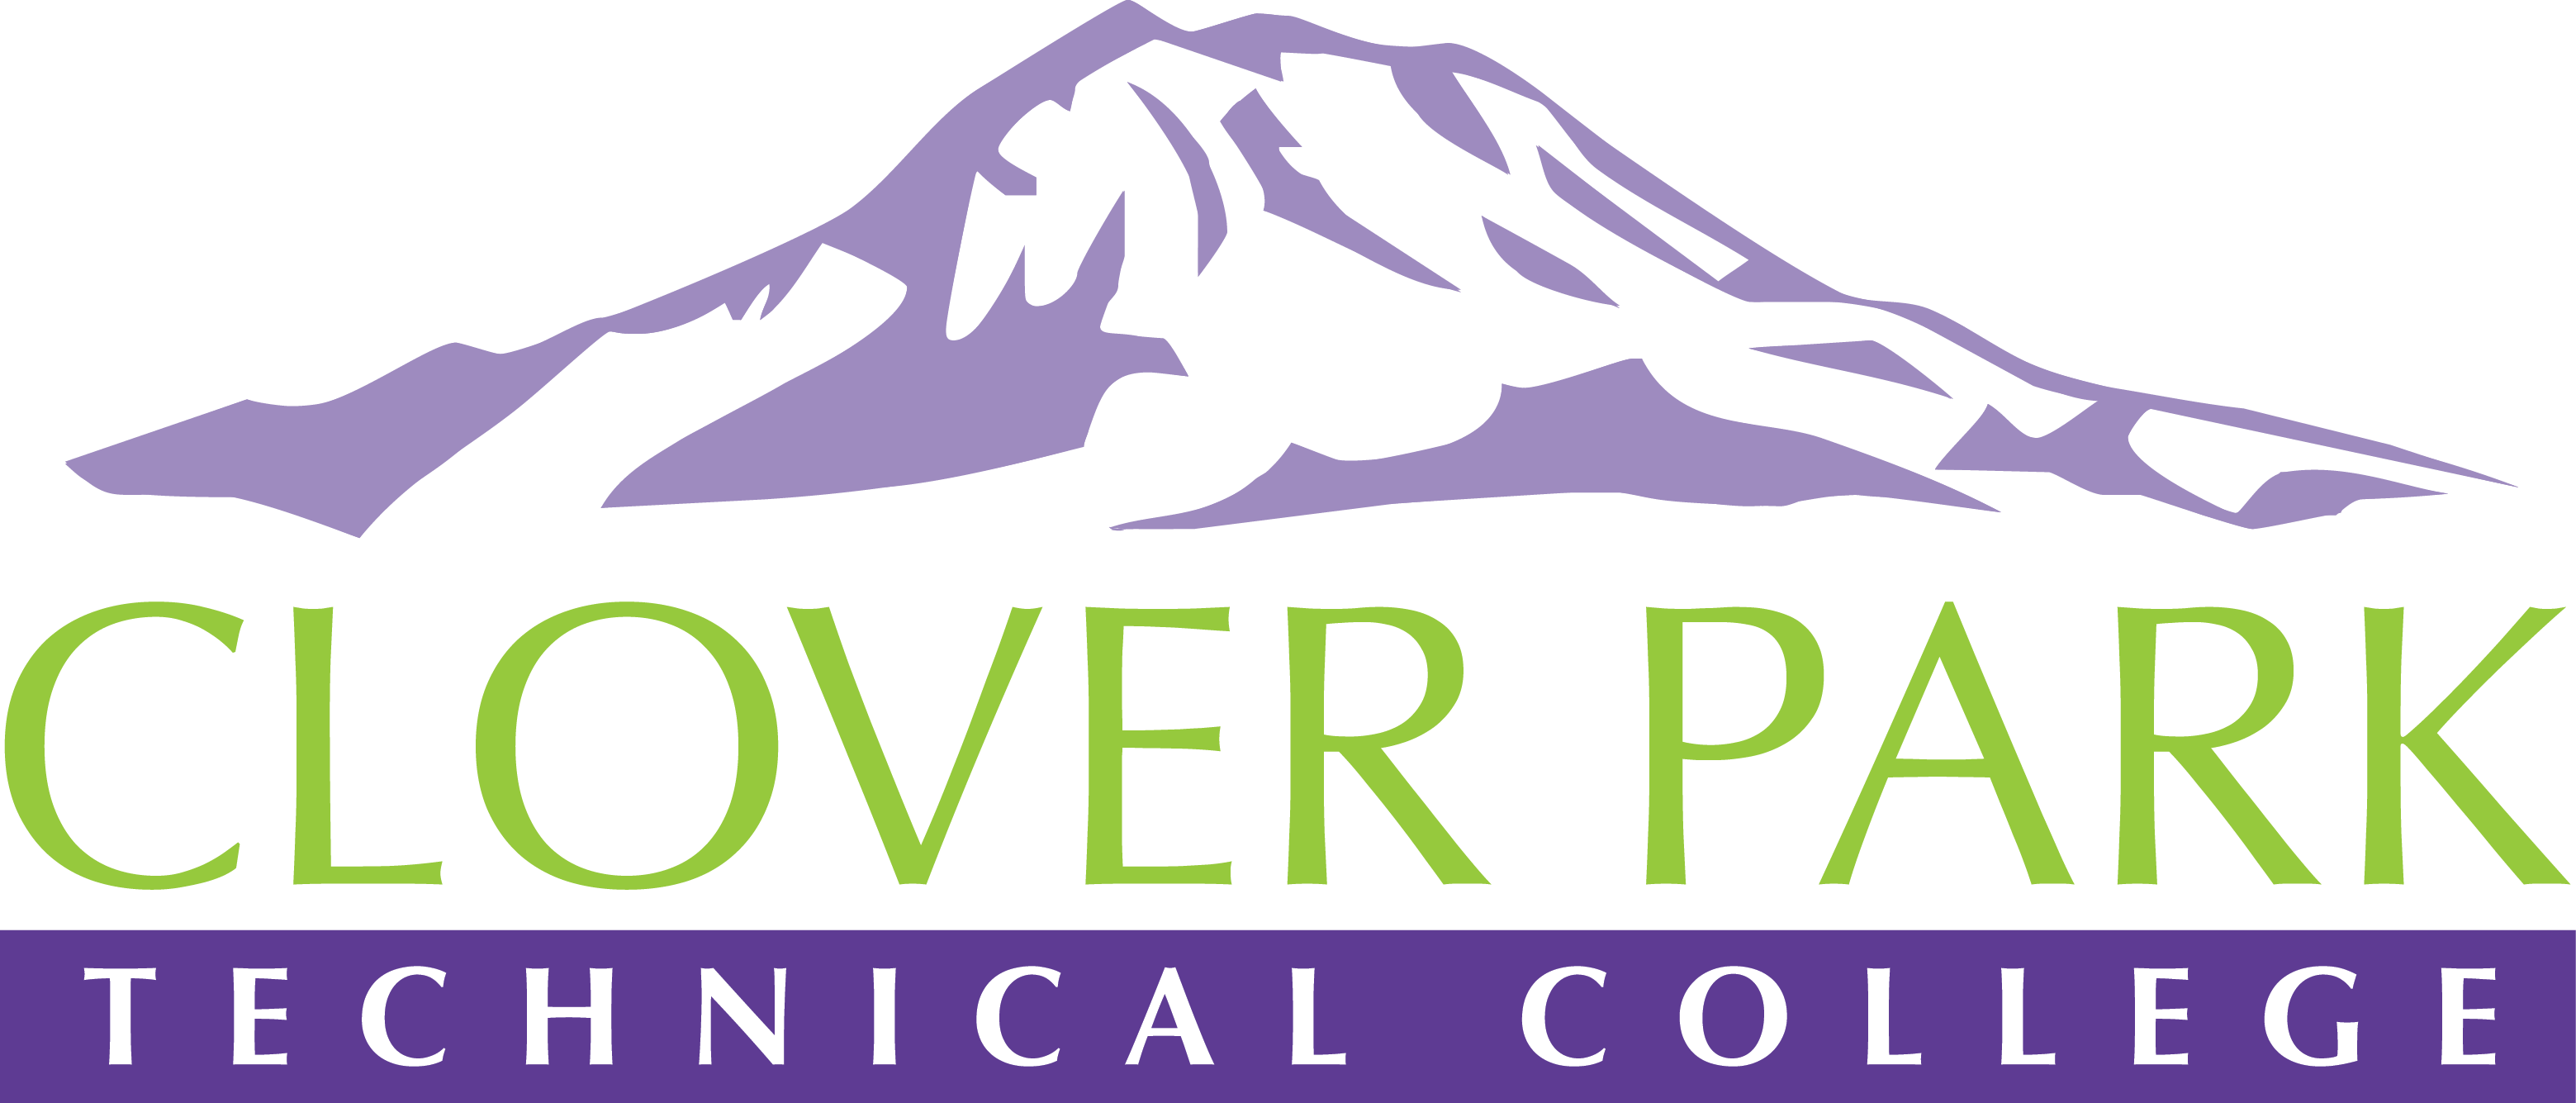 Logos Clover Park Technical College